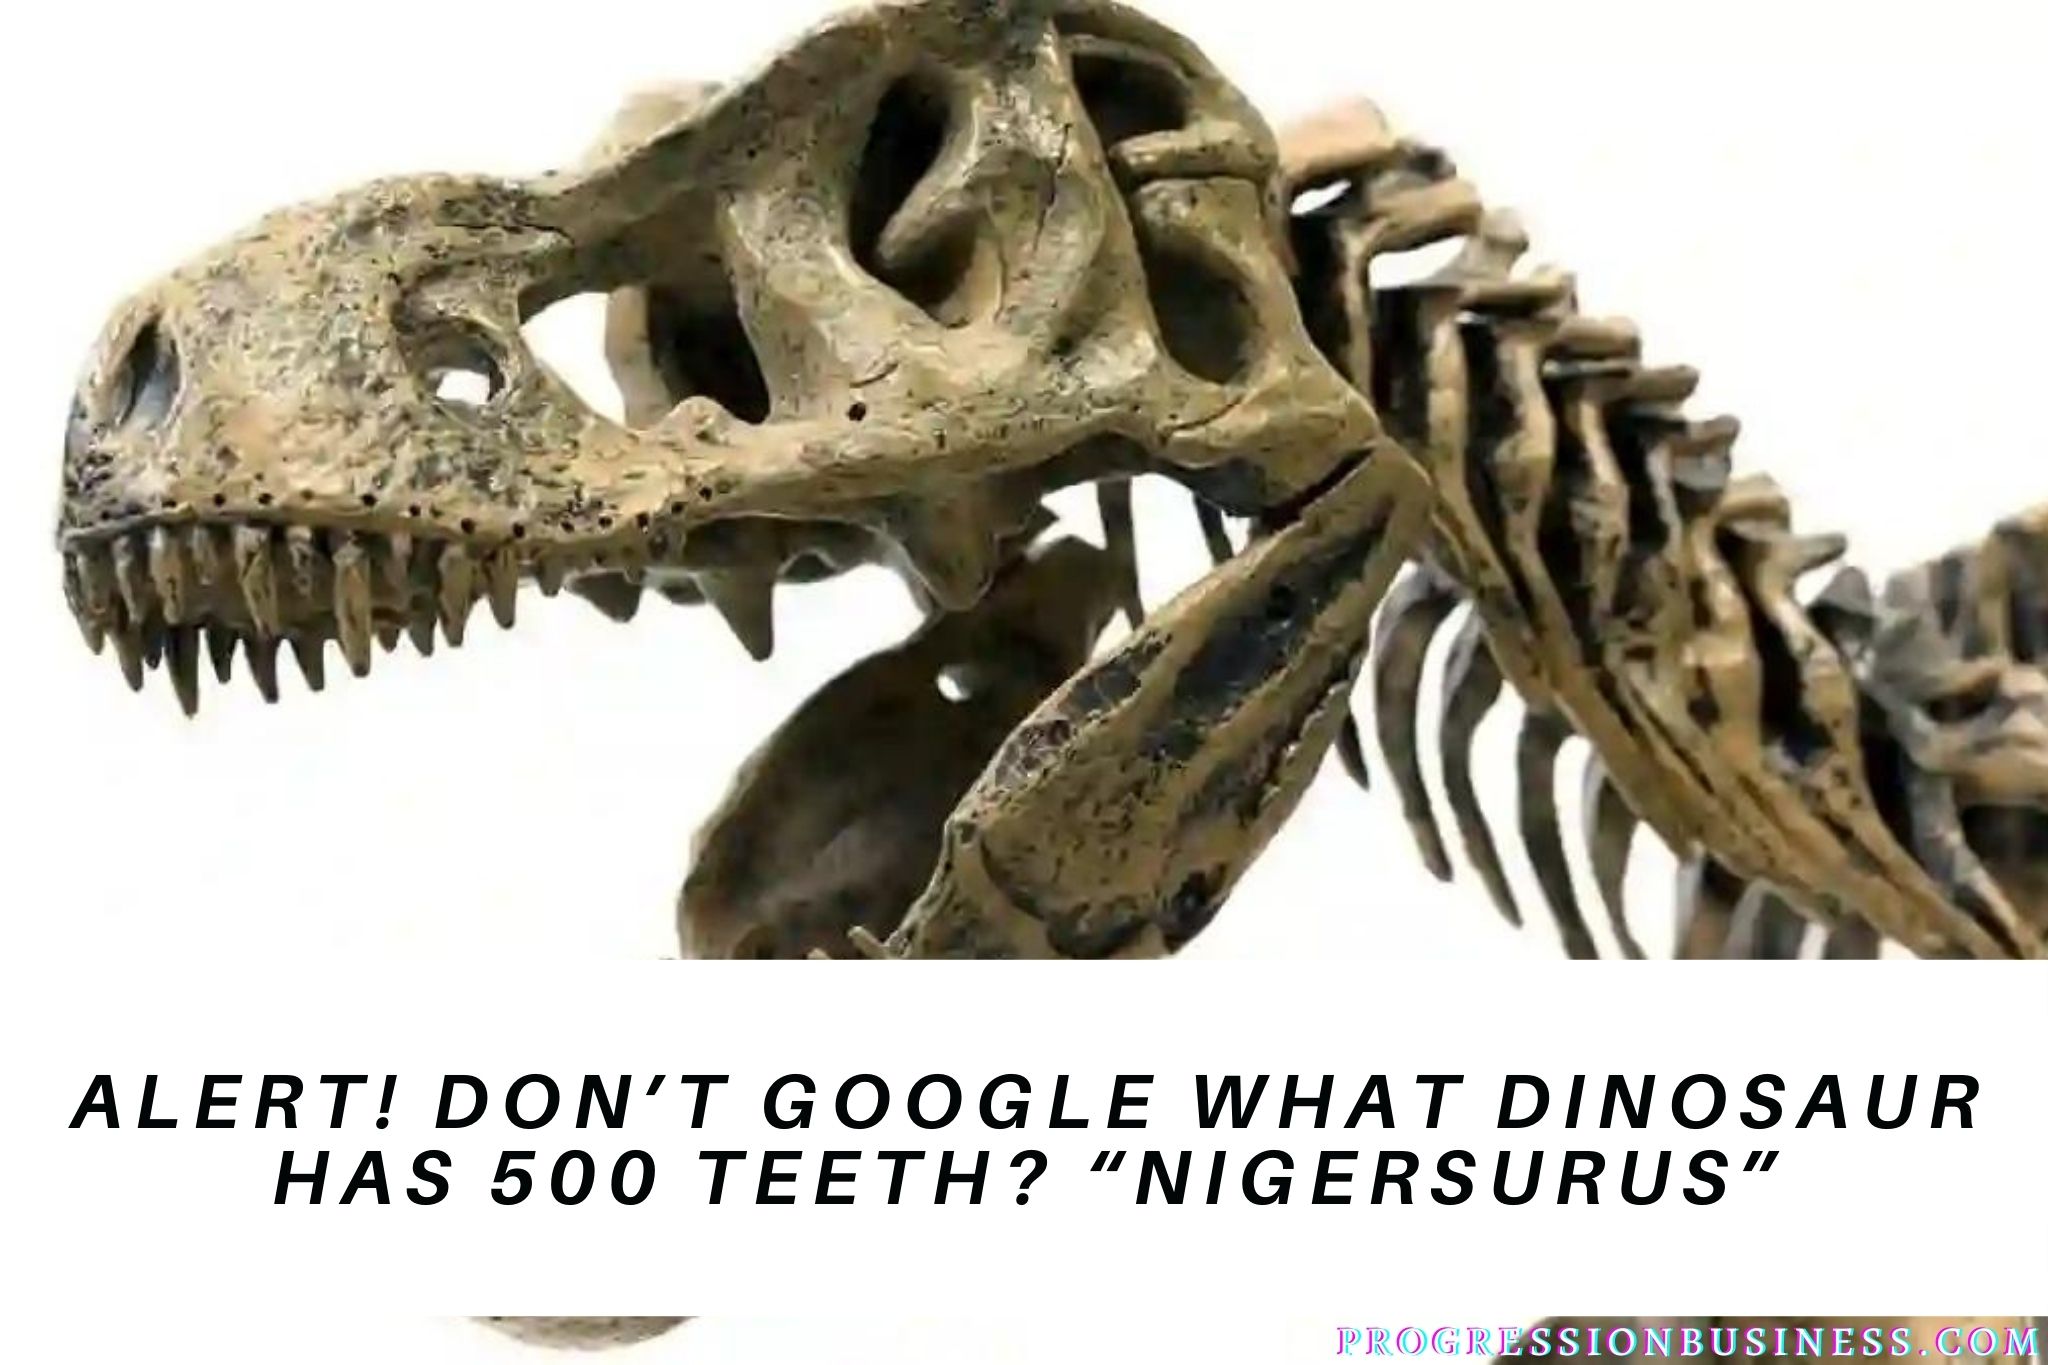 Alert! Don’t Google What Dinosaur Has 500 Teeth? “Nigersurus”